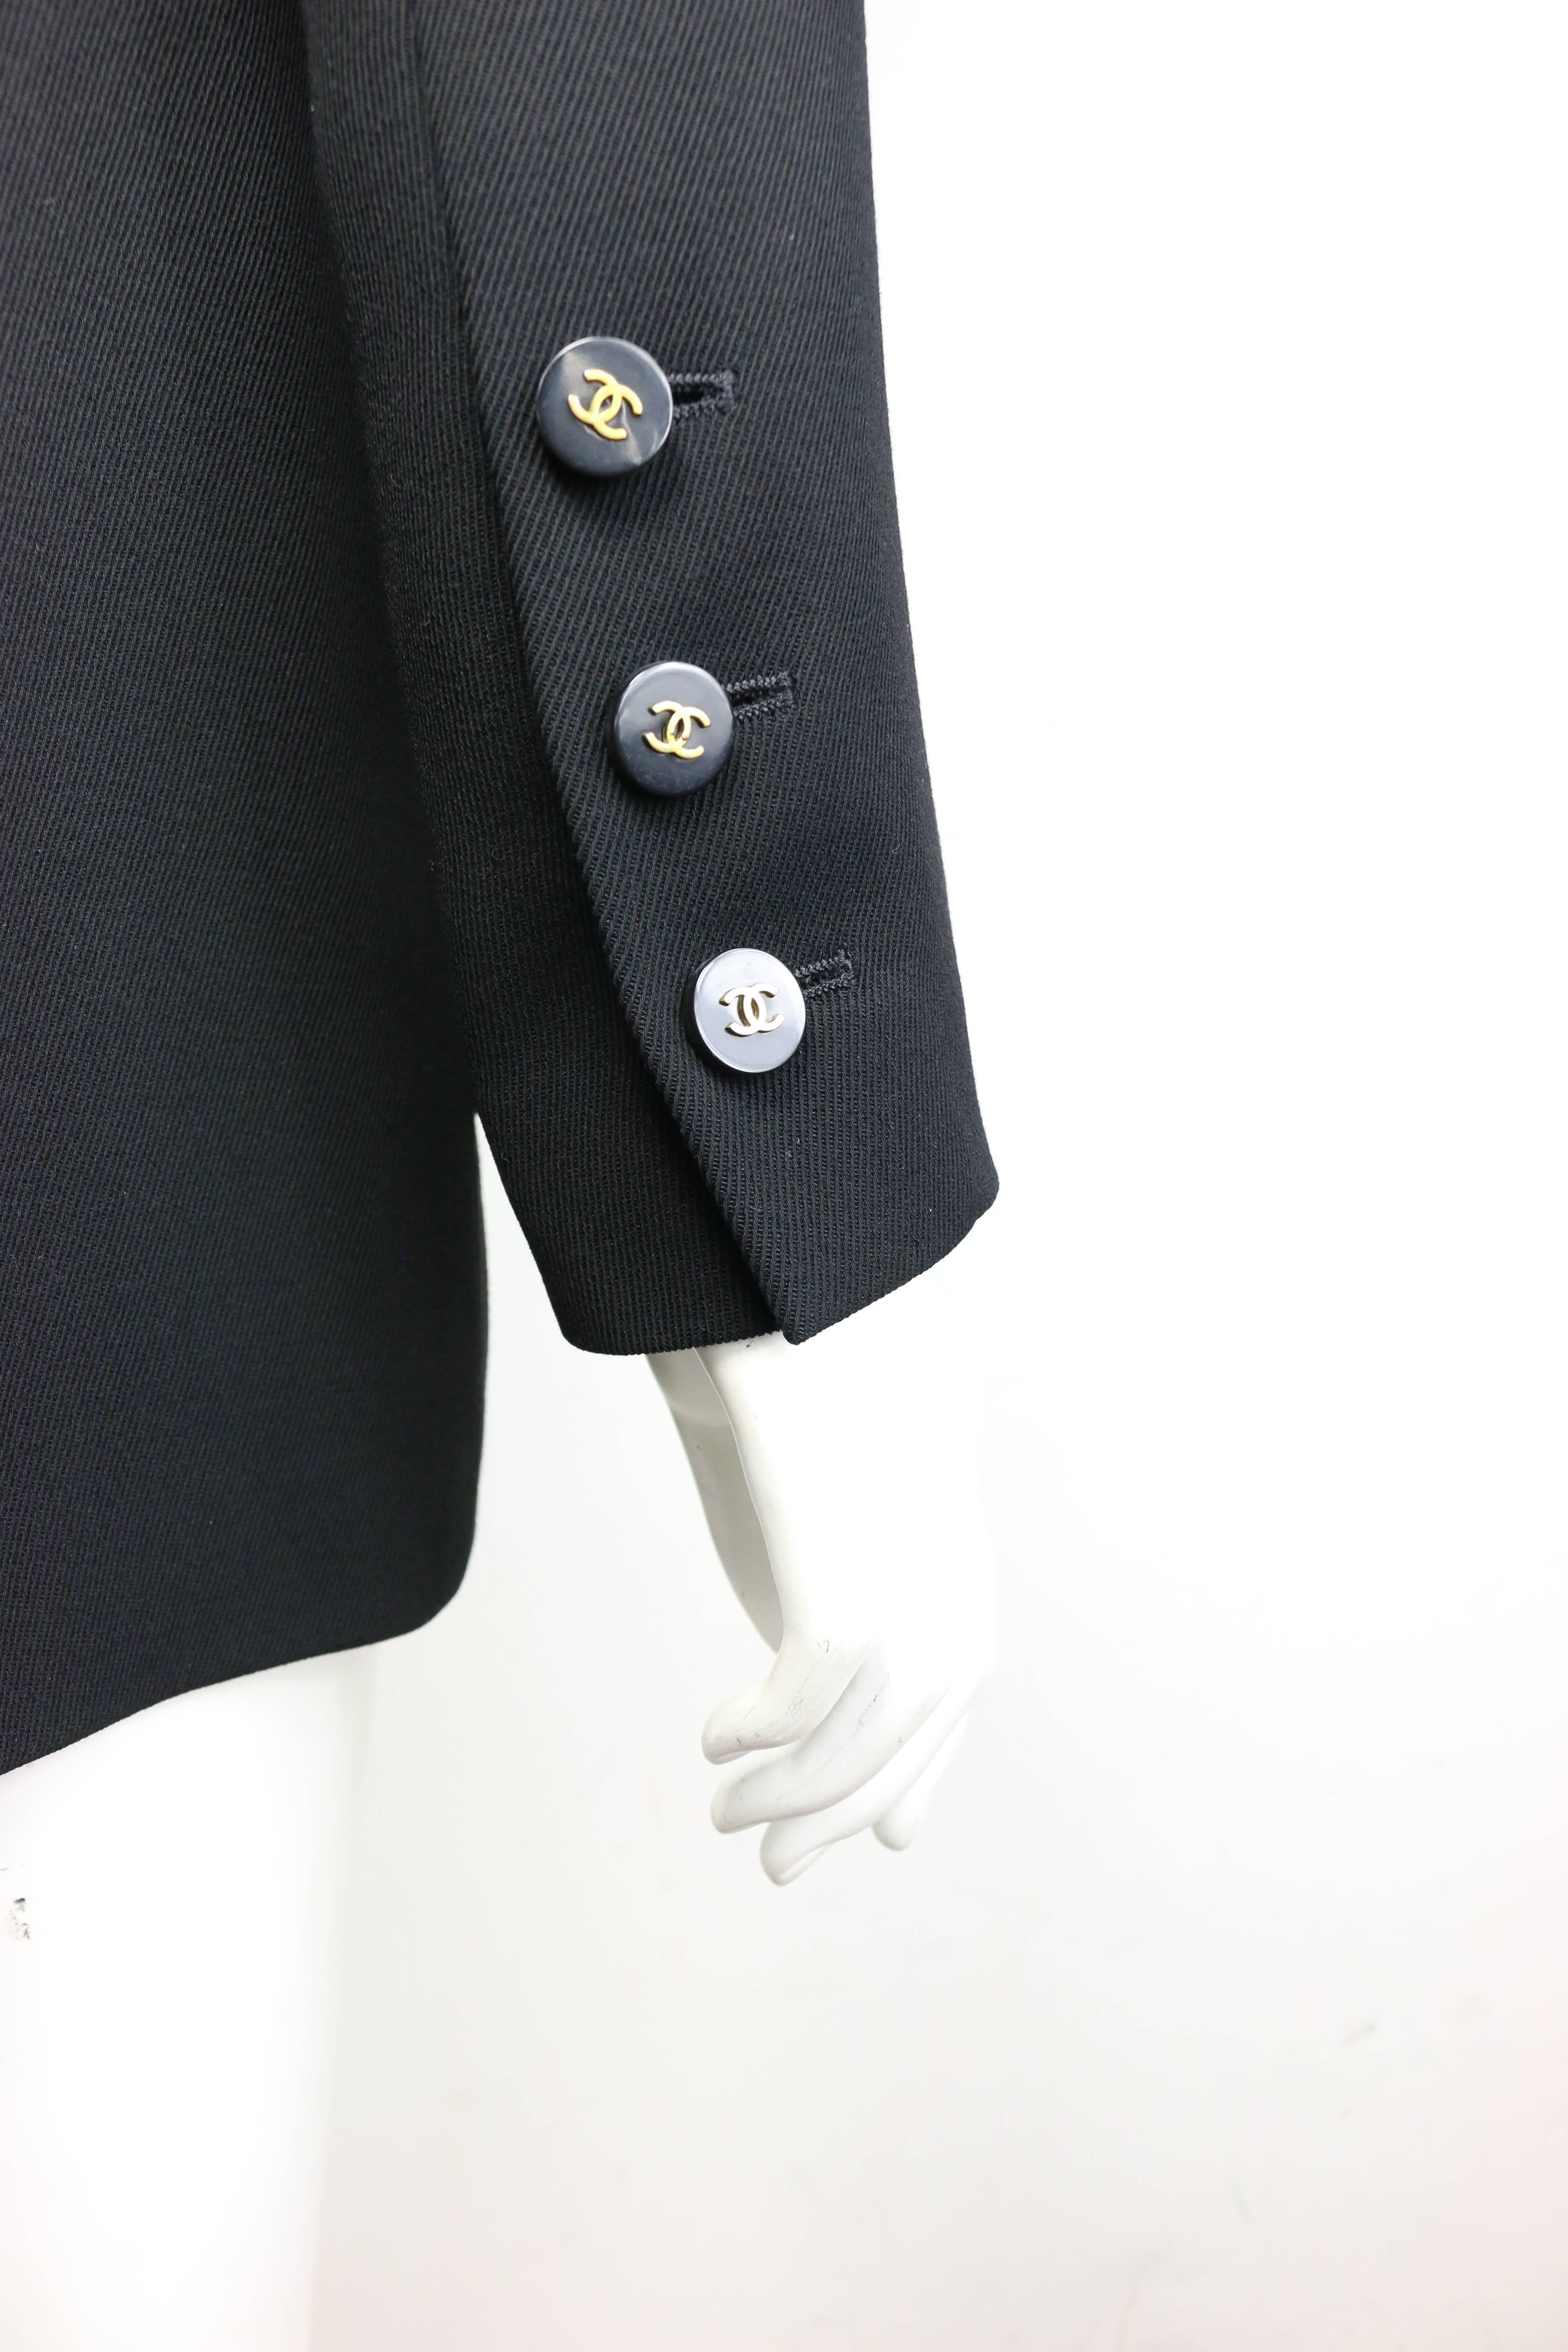 Women's Chanel Black Wool Shawl Neck Double Breasted Jacket